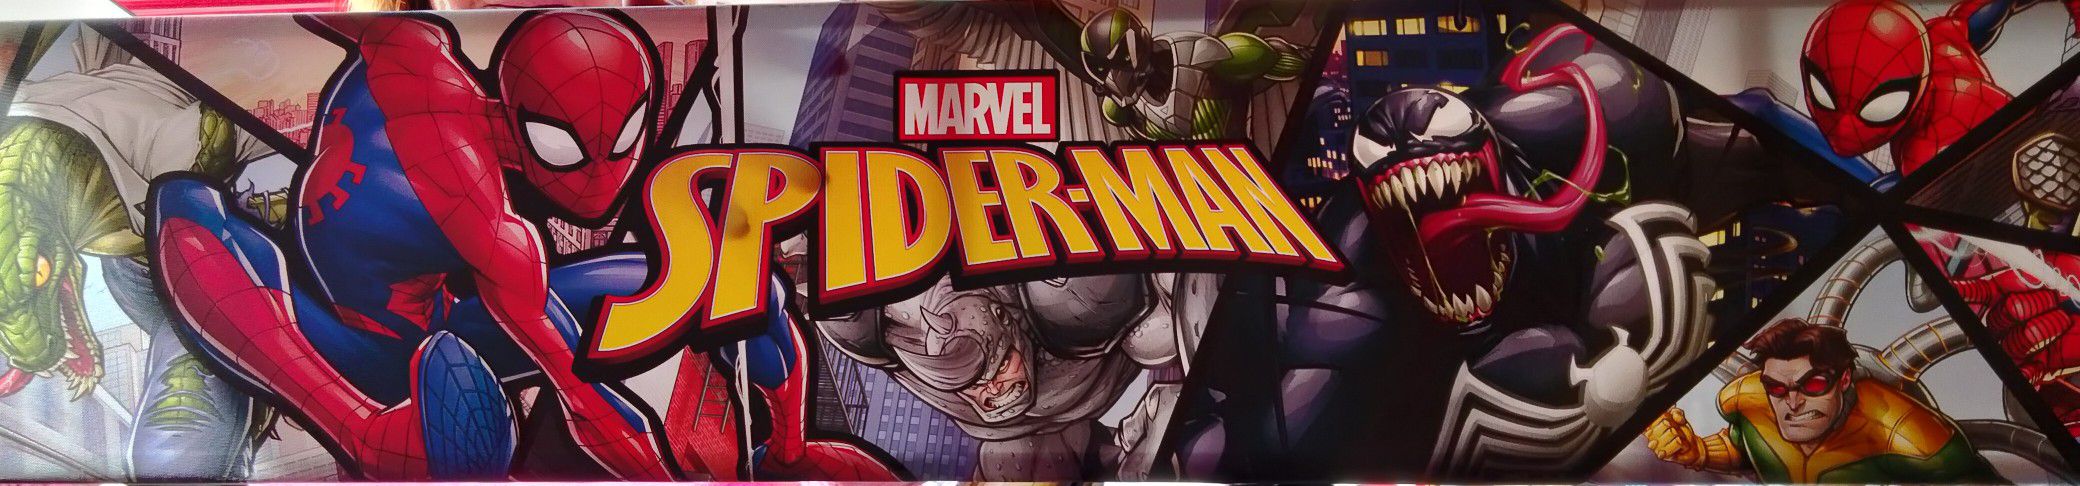 Marvel Spiderman Canvas